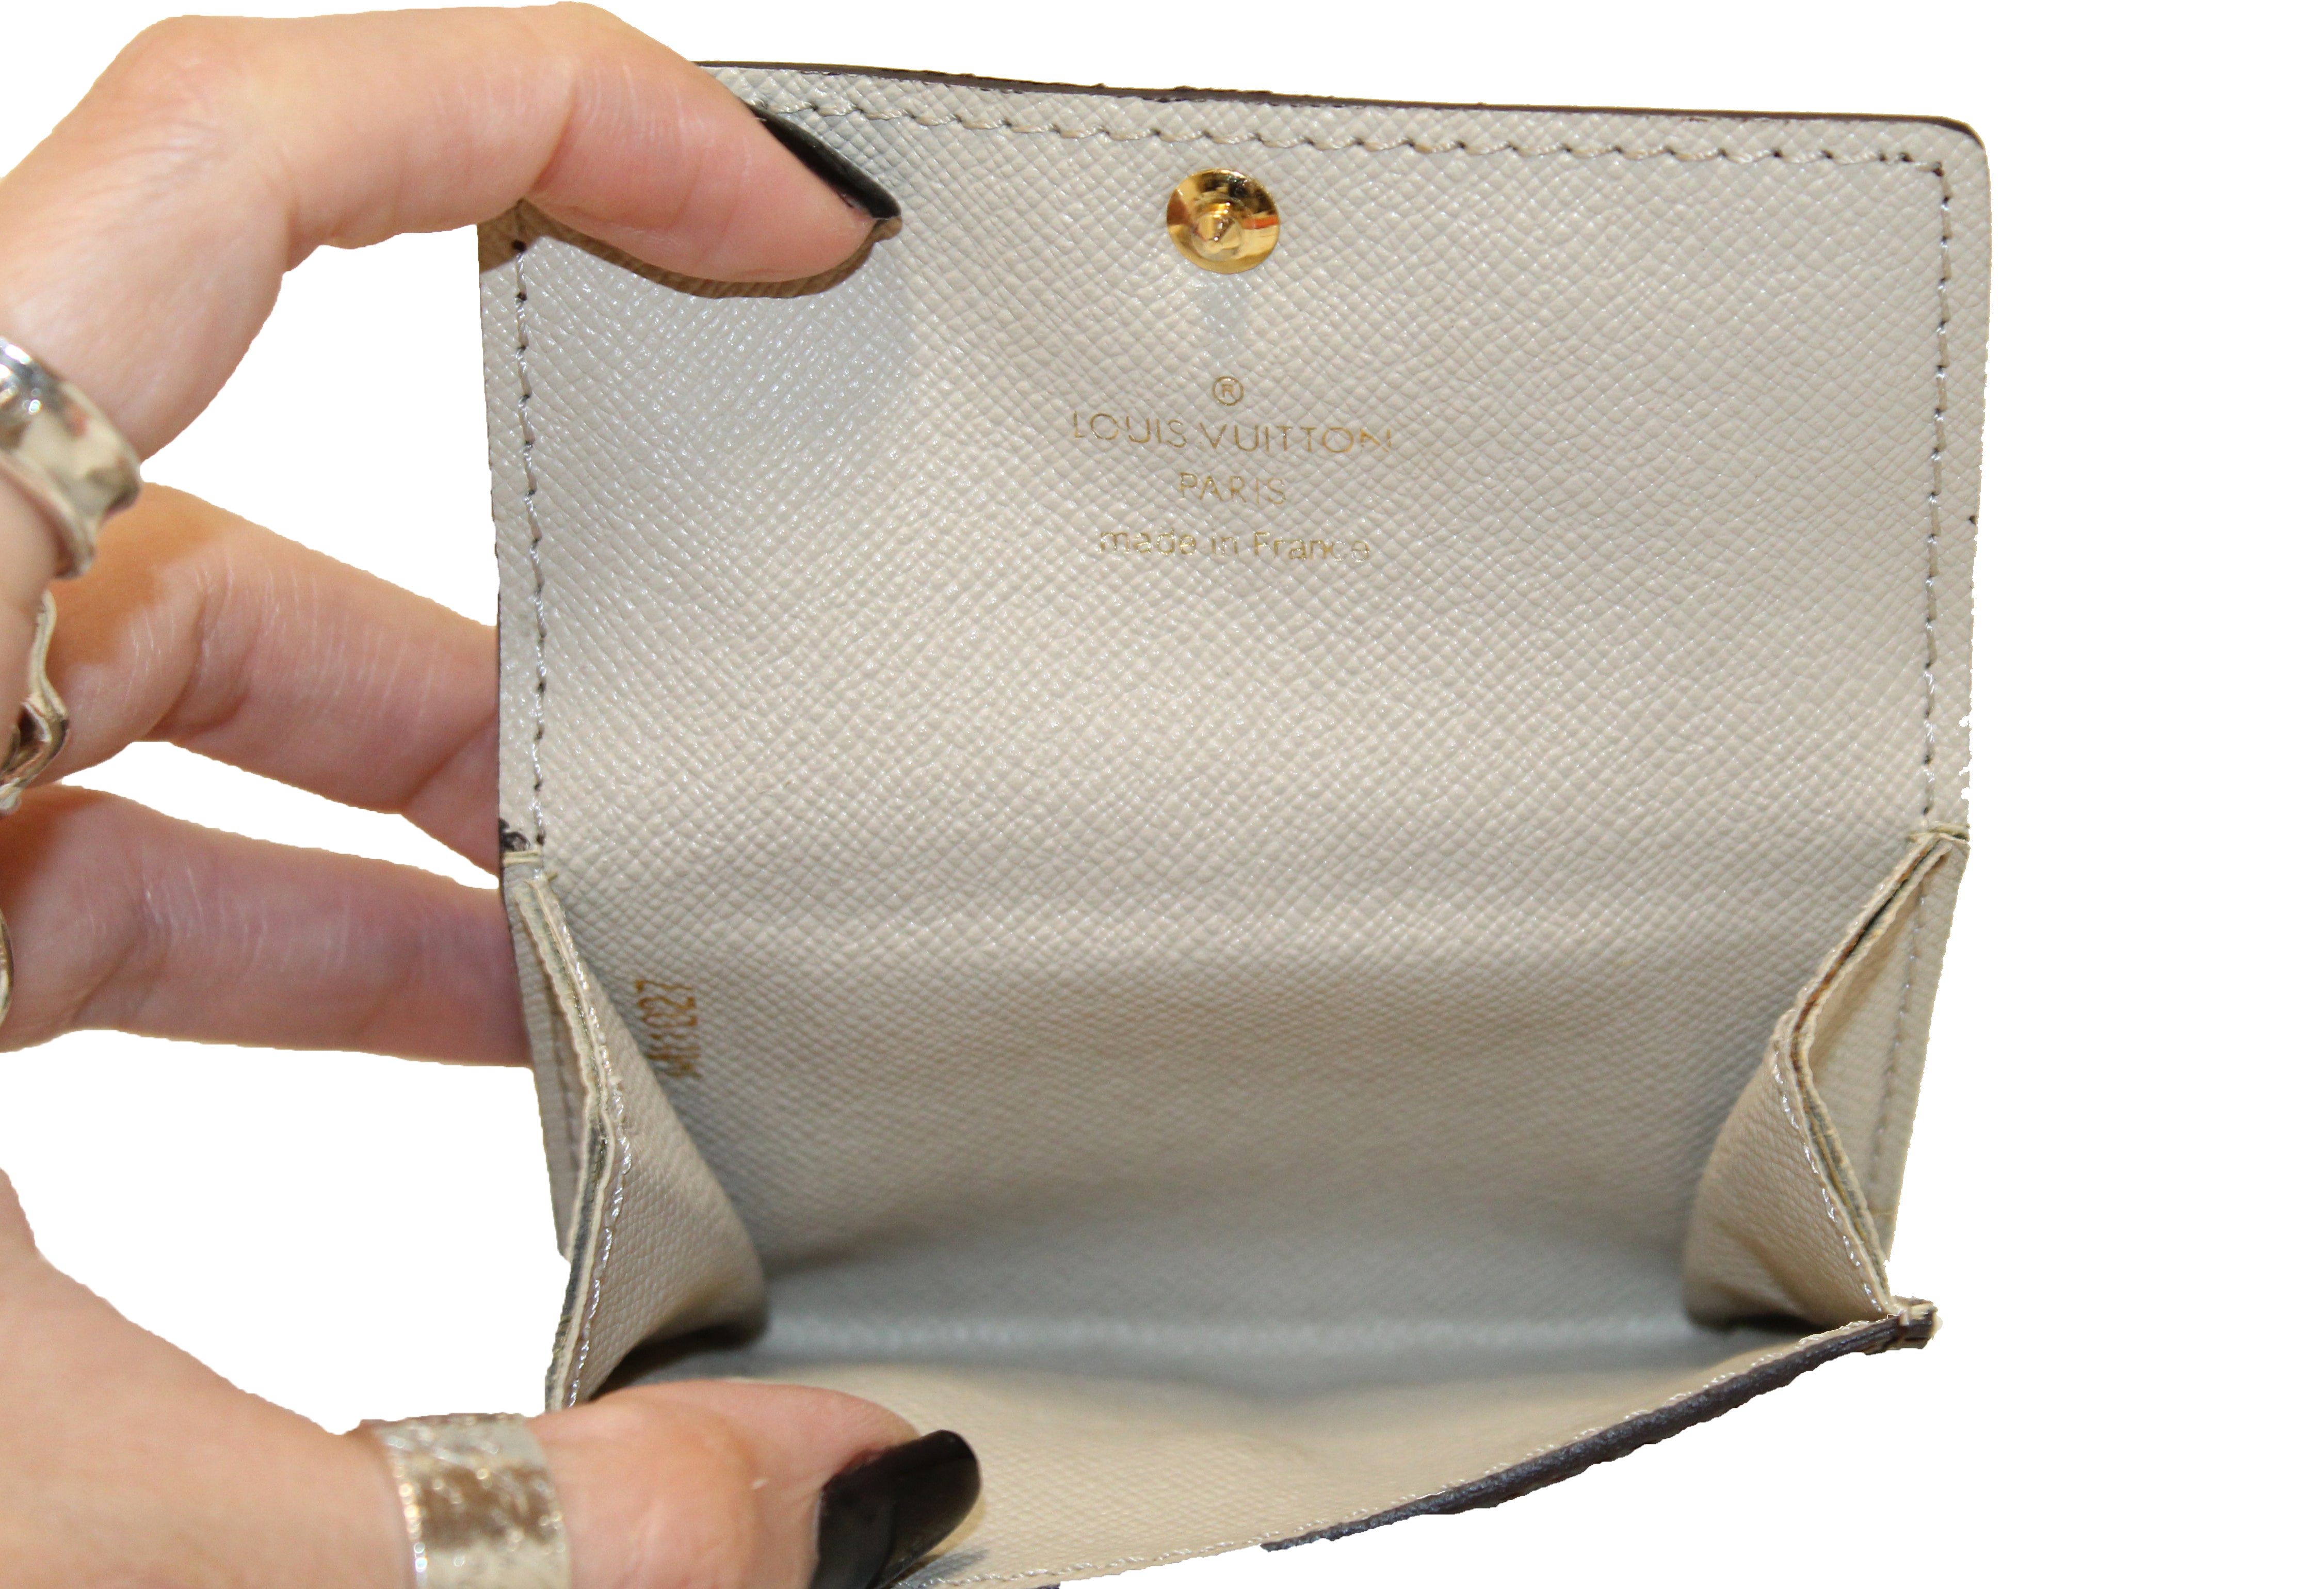 Louis Vuitton monogram leather watch card holder - Louis Vuitton